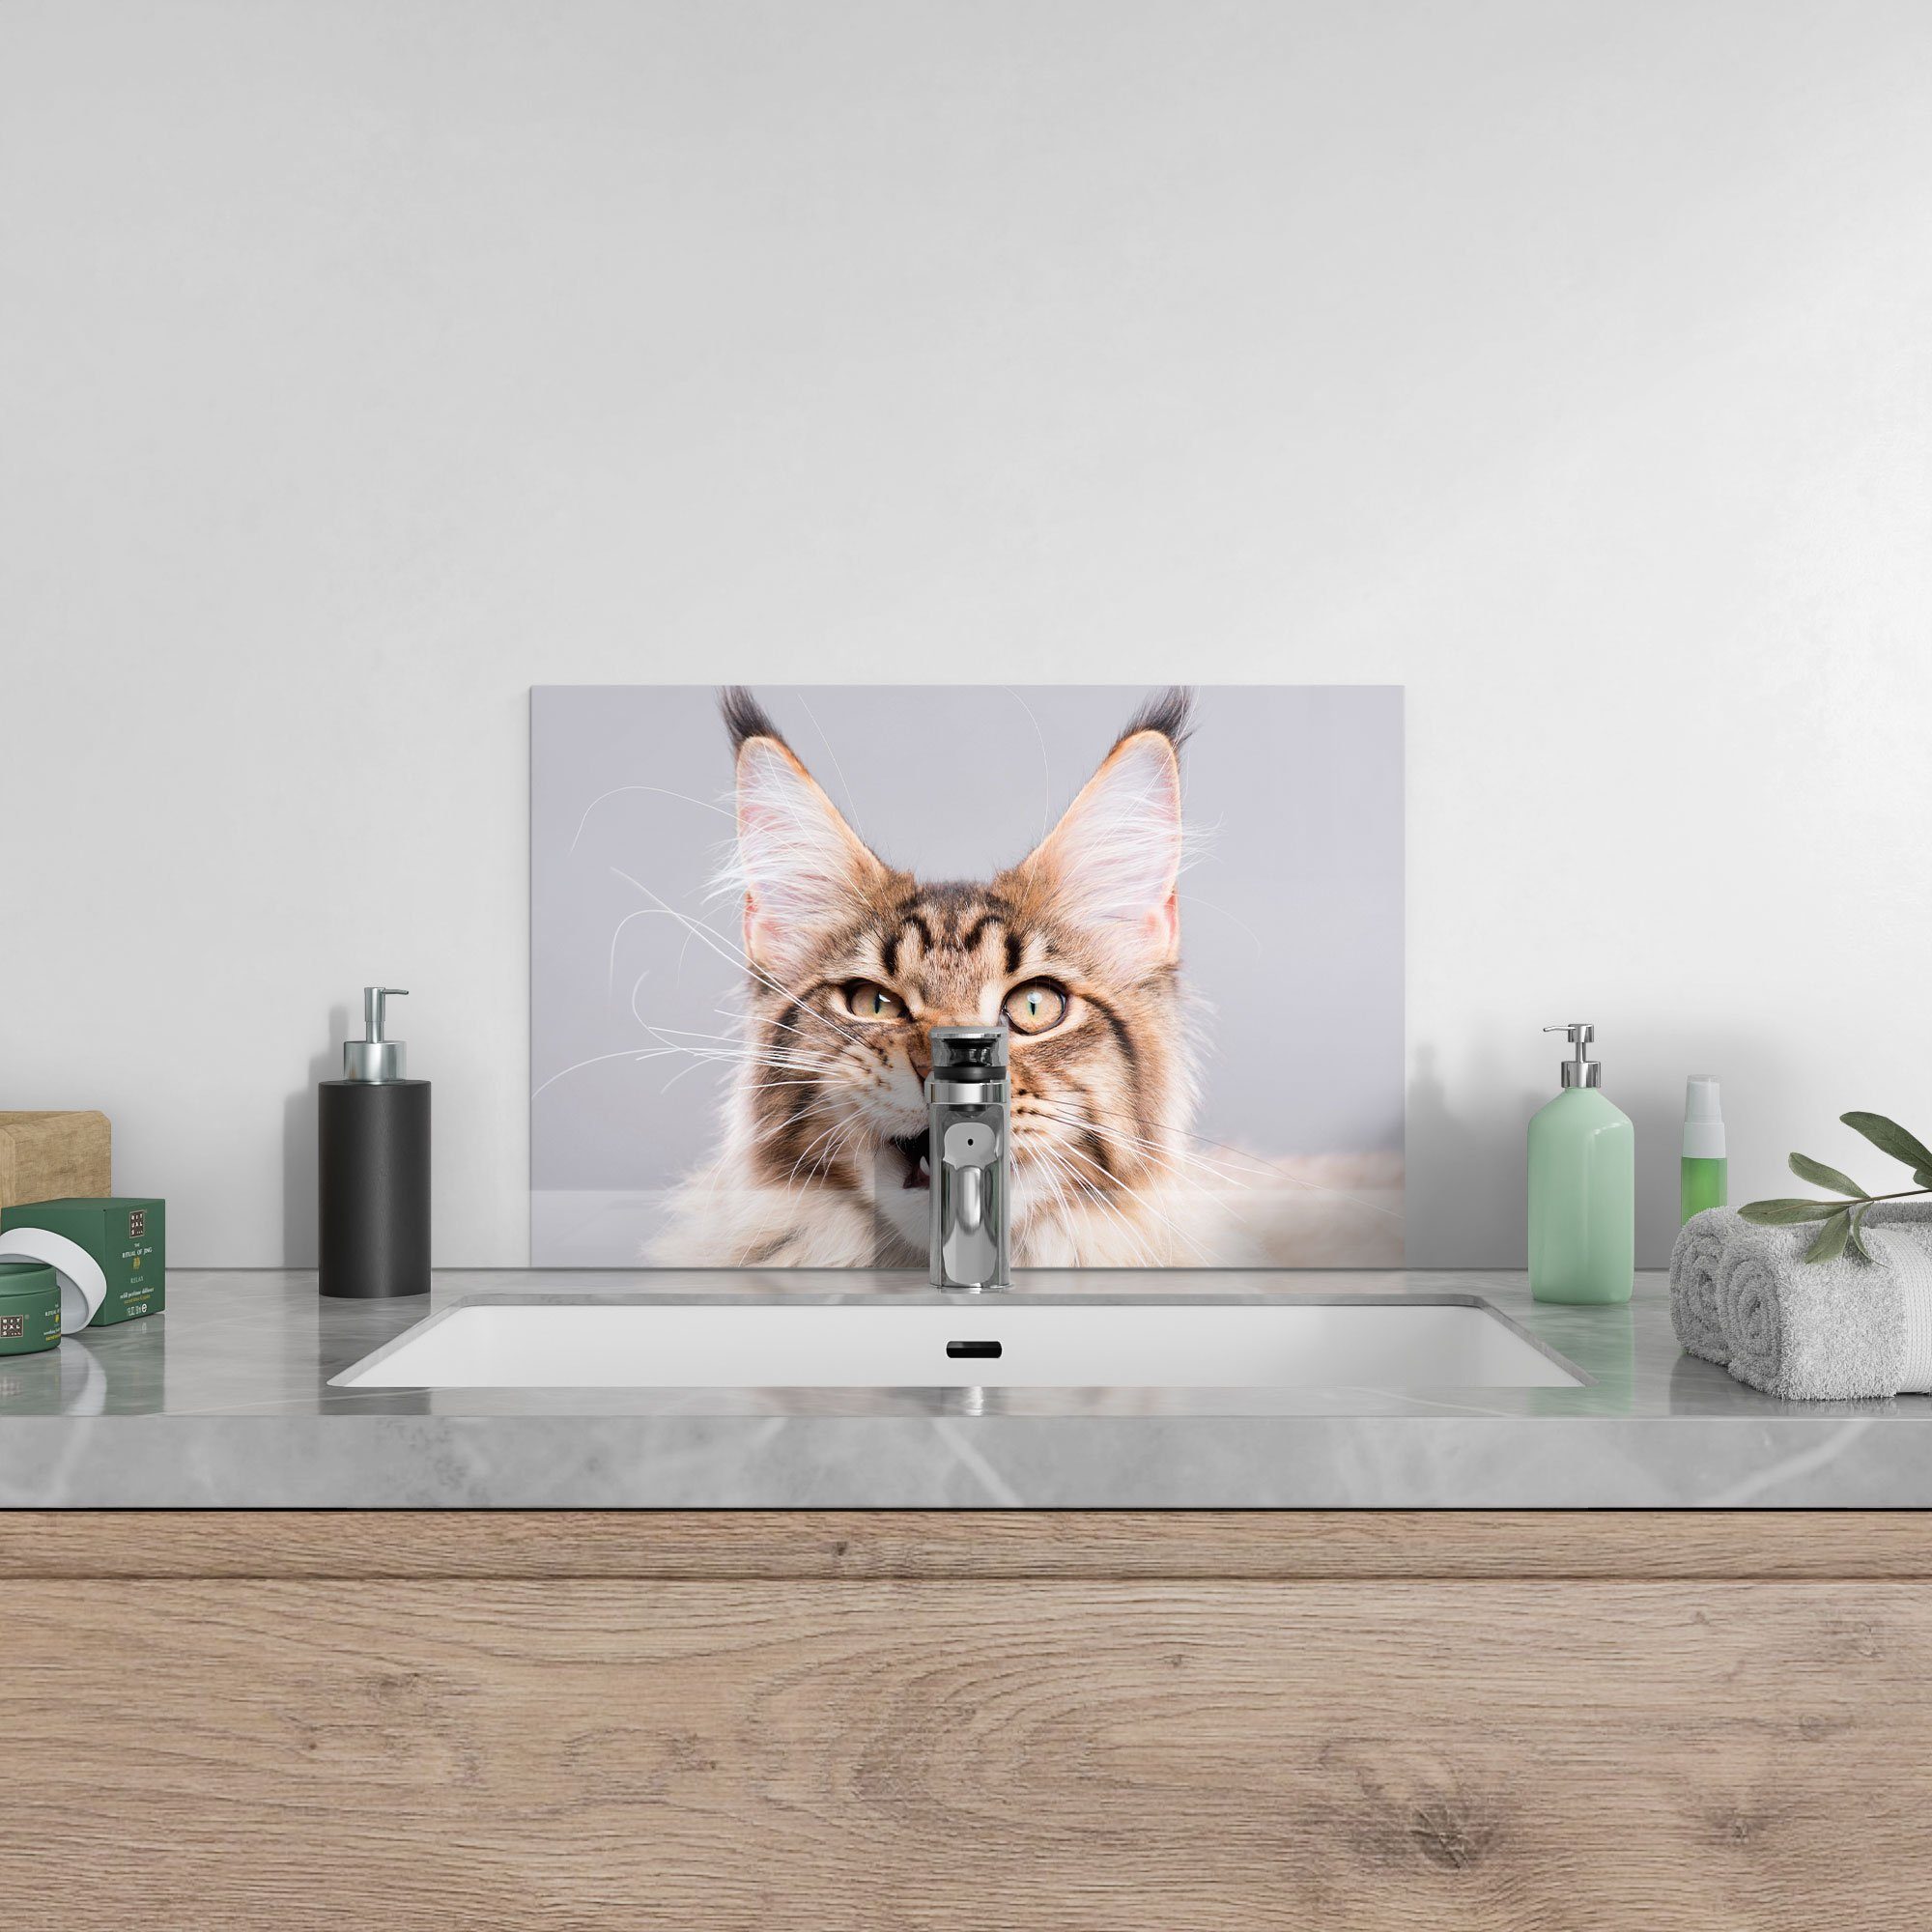 faucht', DEQORI 'Maine Coon Glas Herdblende Badrückwand Küchenrückwand Katze Spritzschutz